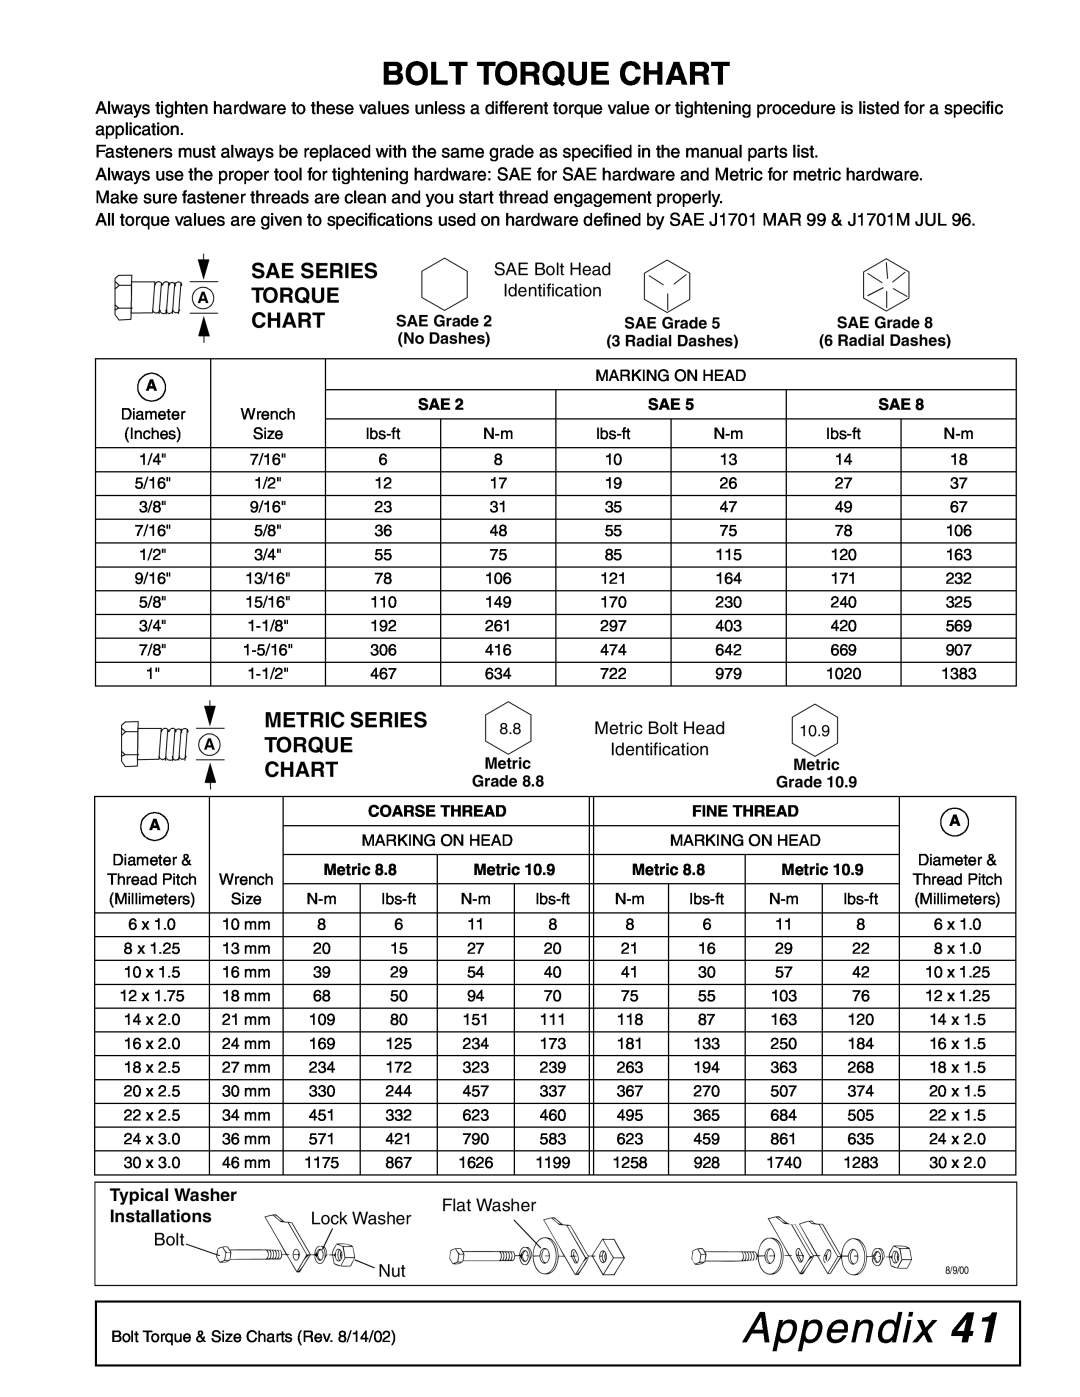 Woods Equipment RDC54, RD60, RD72 manual Appendix, Bolt Torque Chart, Sae Series A Torque Chart, Metric Series 